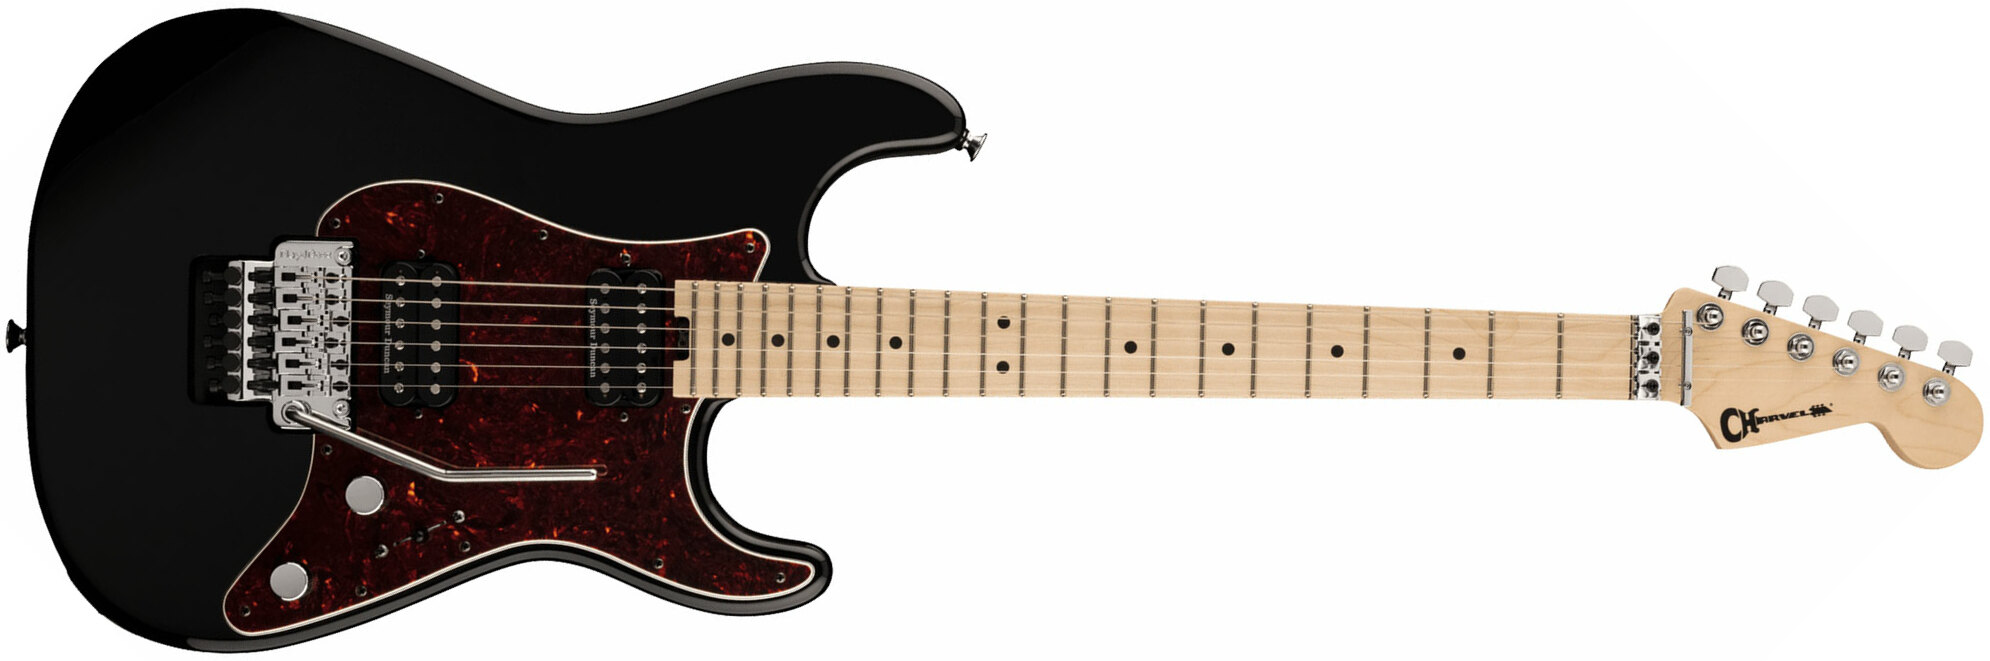 Charvel So-cal Style 1 Hh Fr M Pro-mod 2h Seymour Duncan Mn - Gamera Black - Str shape electric guitar - Main picture